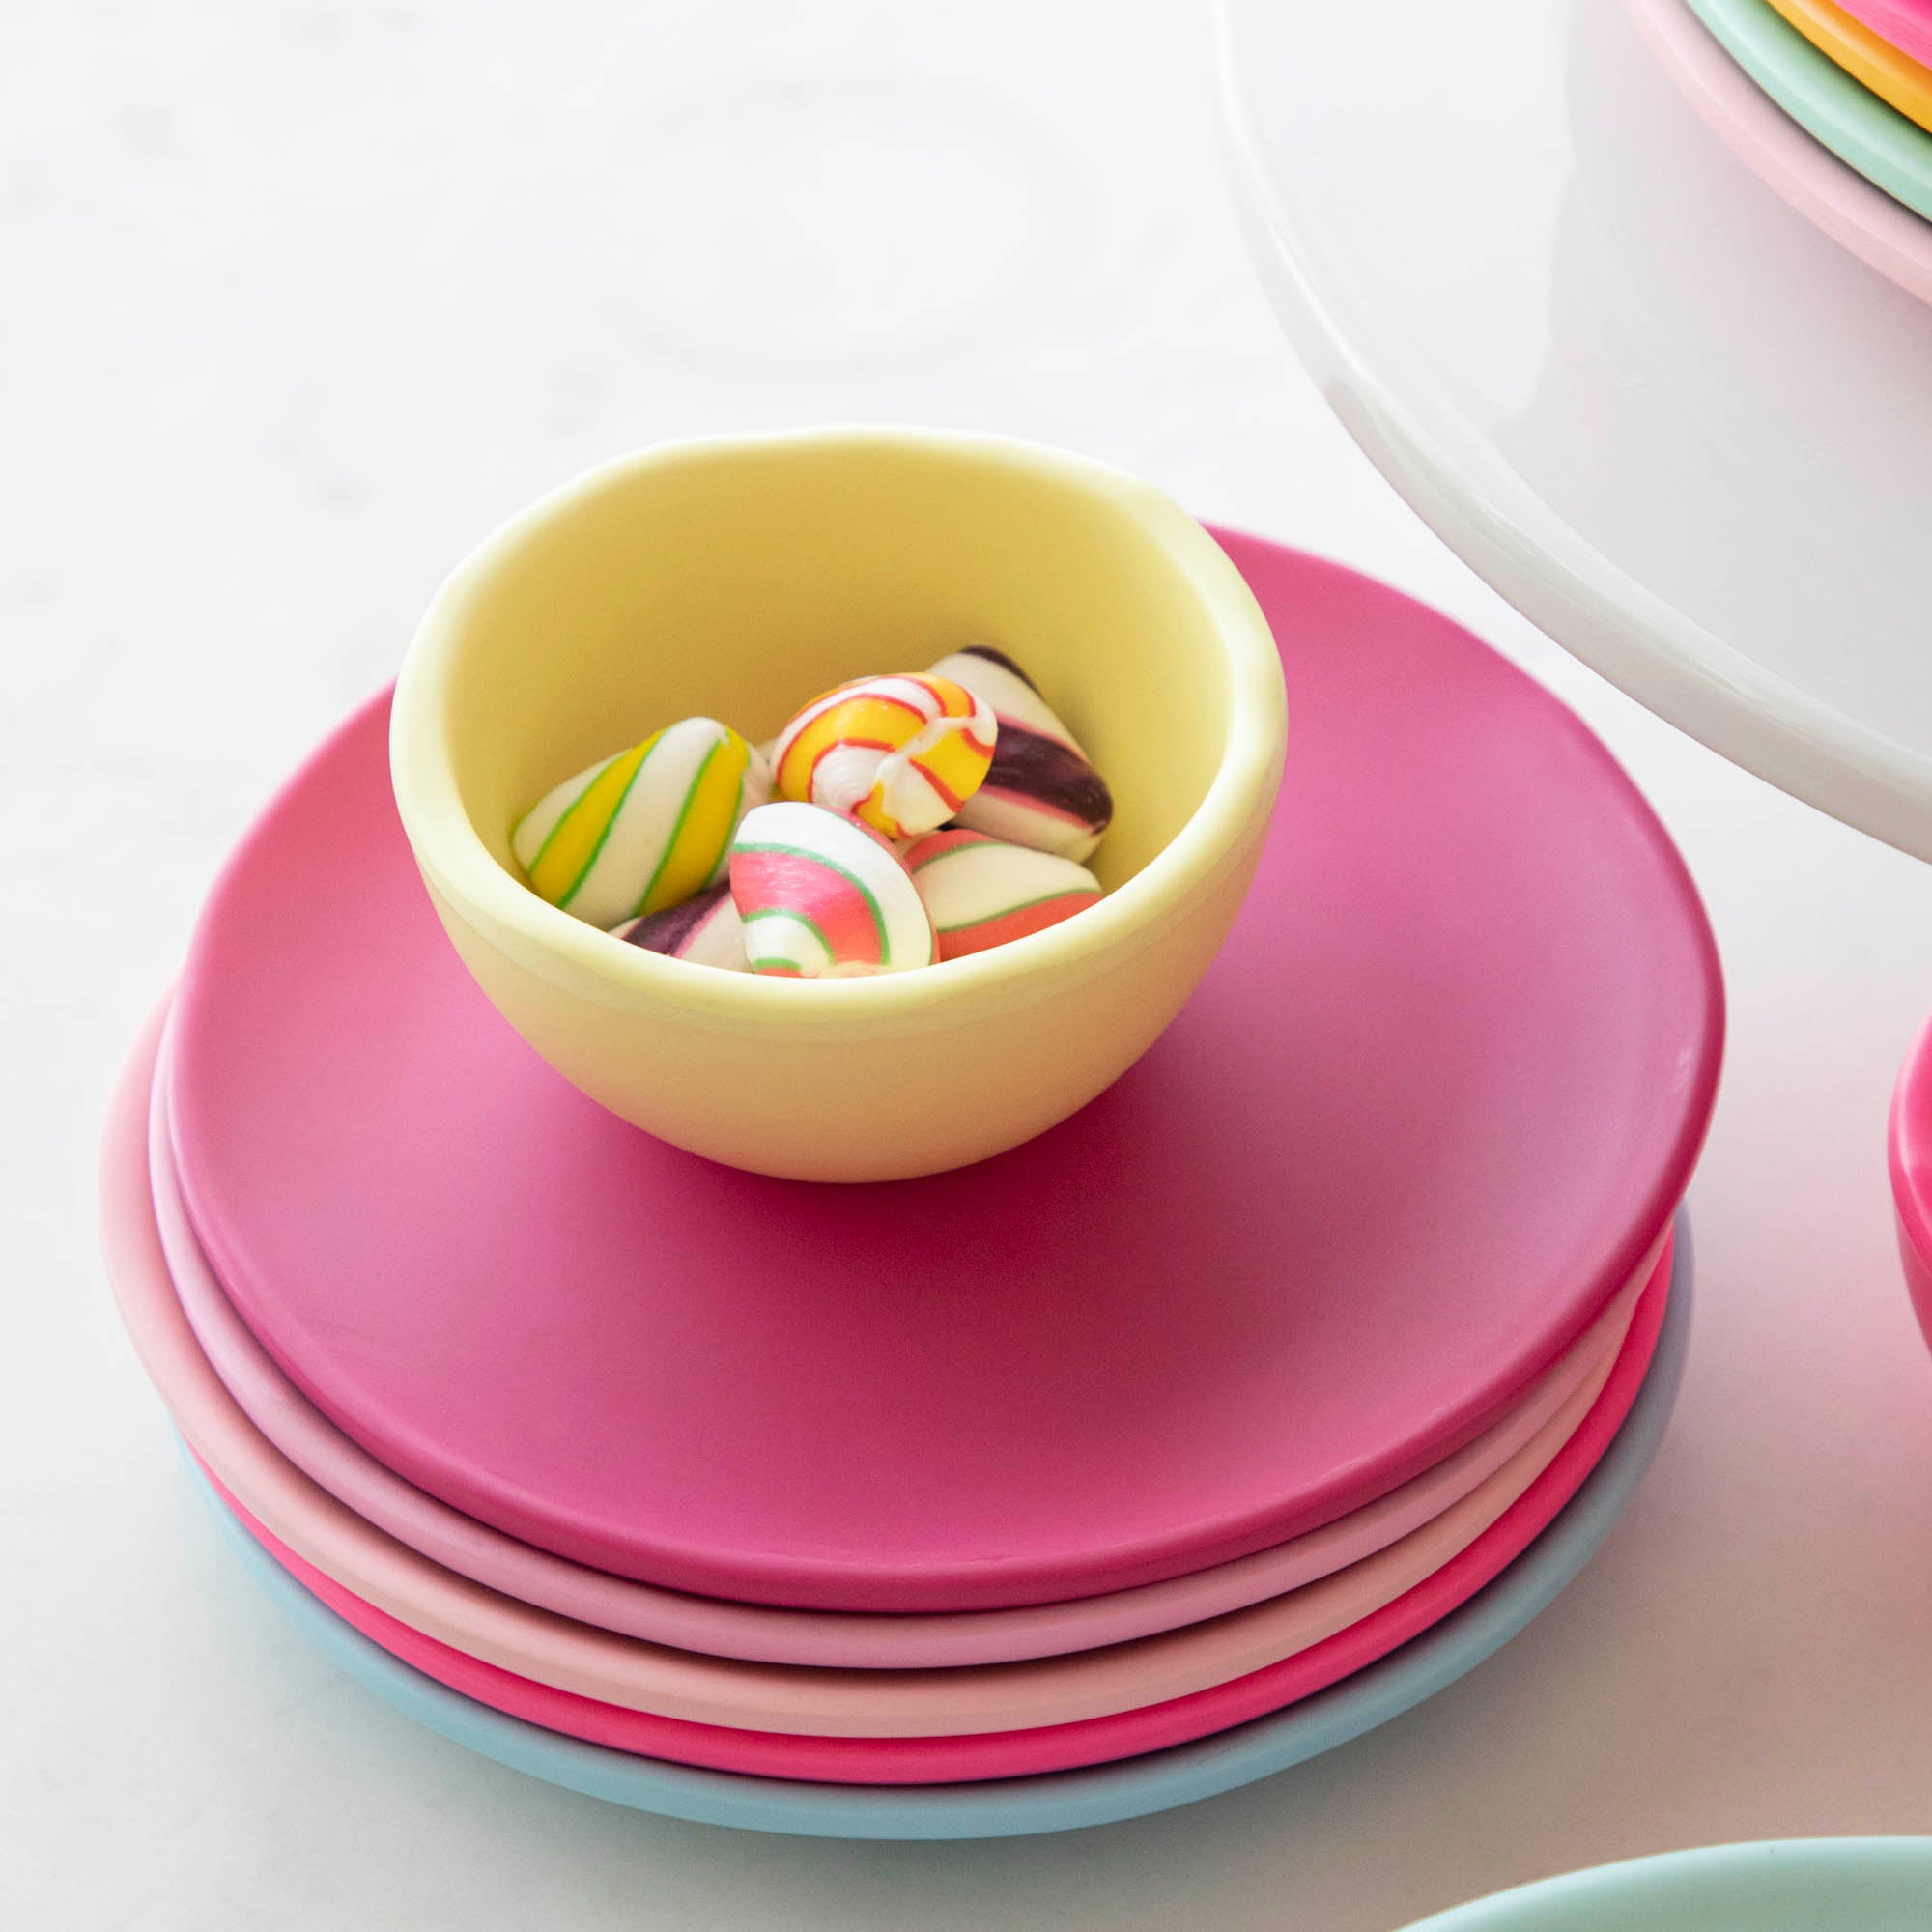 A set of colorful, dishwasher-safe Glitterville Rainbow Melamine Trinket Bowls on a table.